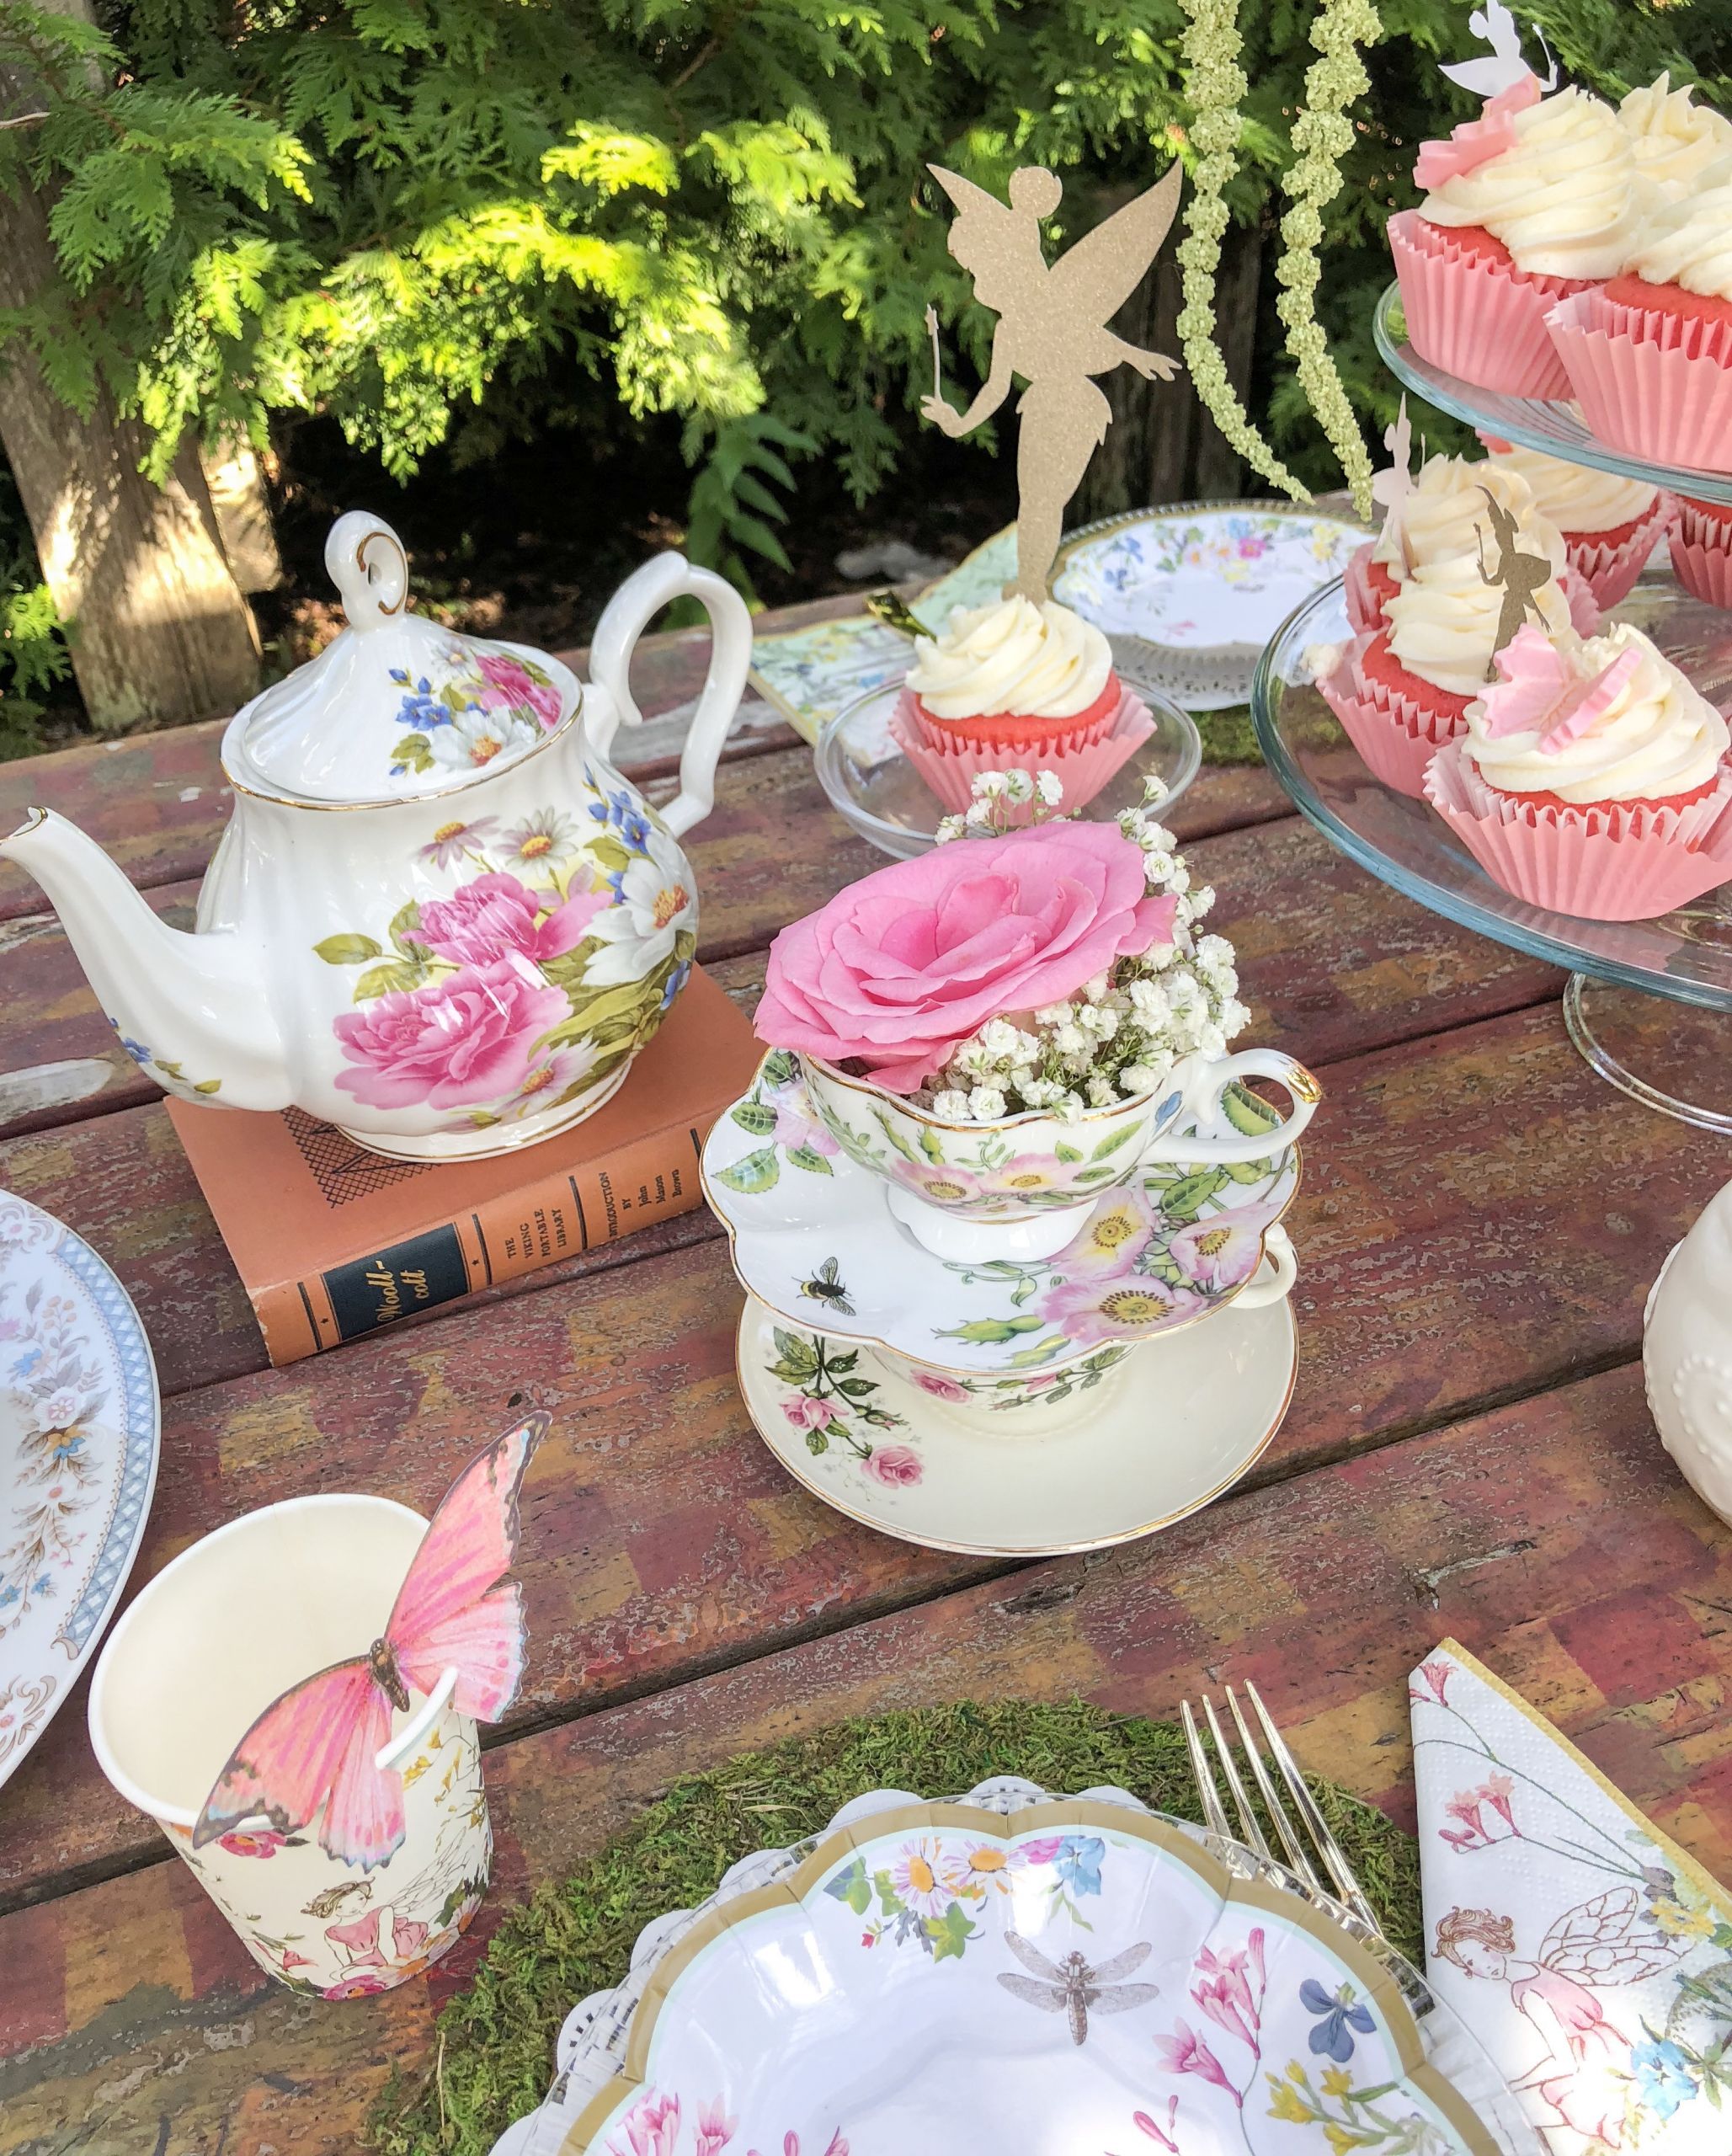 Backyard Tea Party Decorating Ideas
 Raley s Fairy Garden Tea Party Poppy Grace